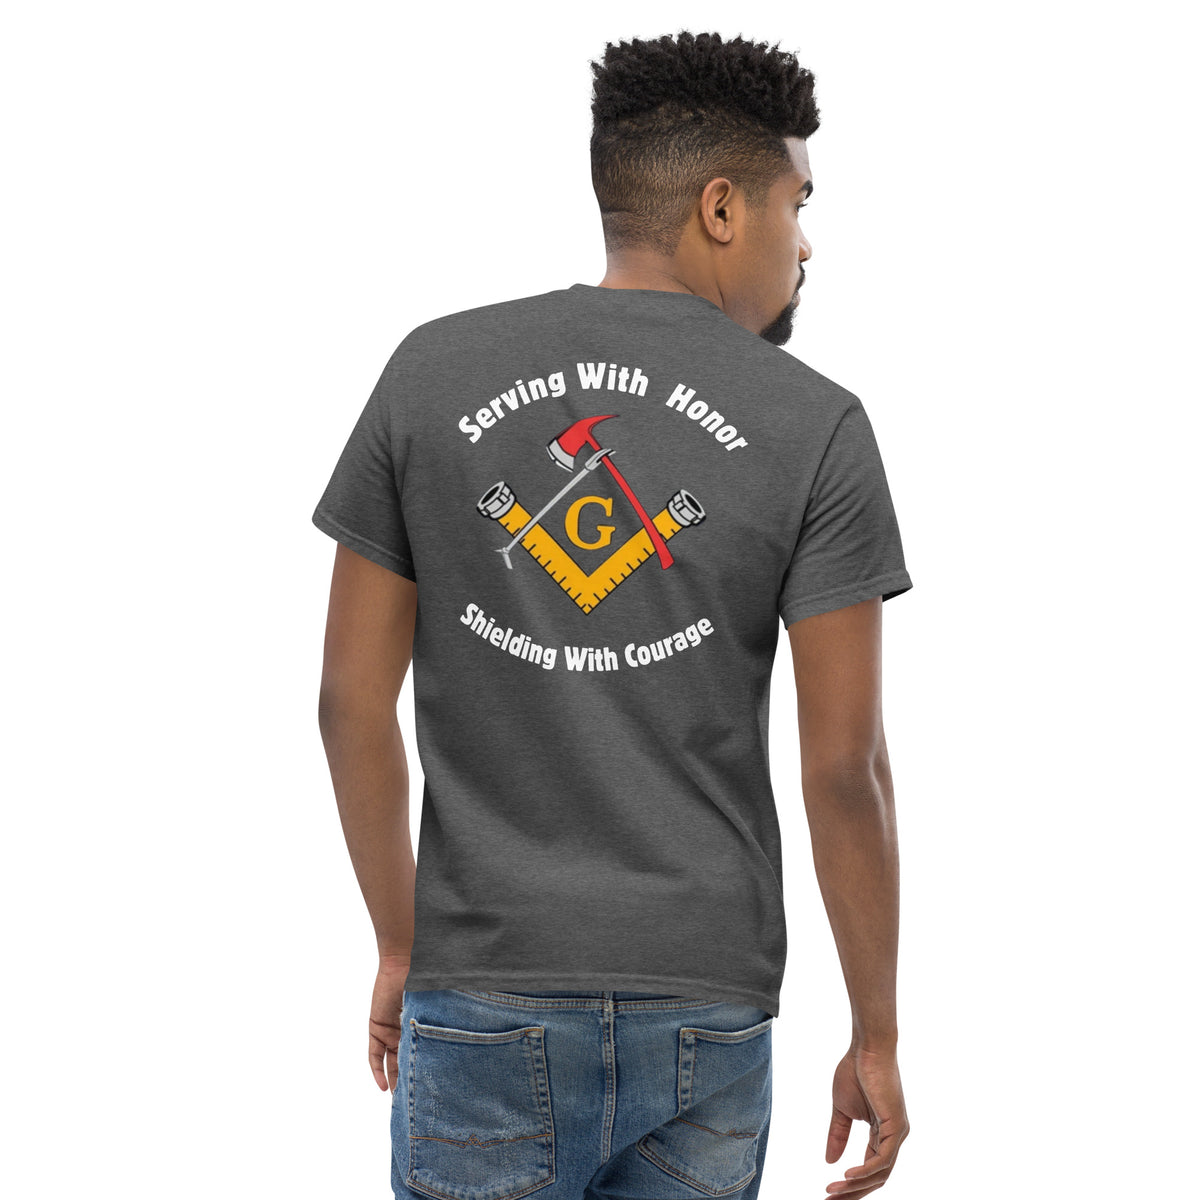 Bravery and Brotherhood Tee Shirt - Custom Masonic Firefighter Emblem Design by The Salty Medic Clothing Co.